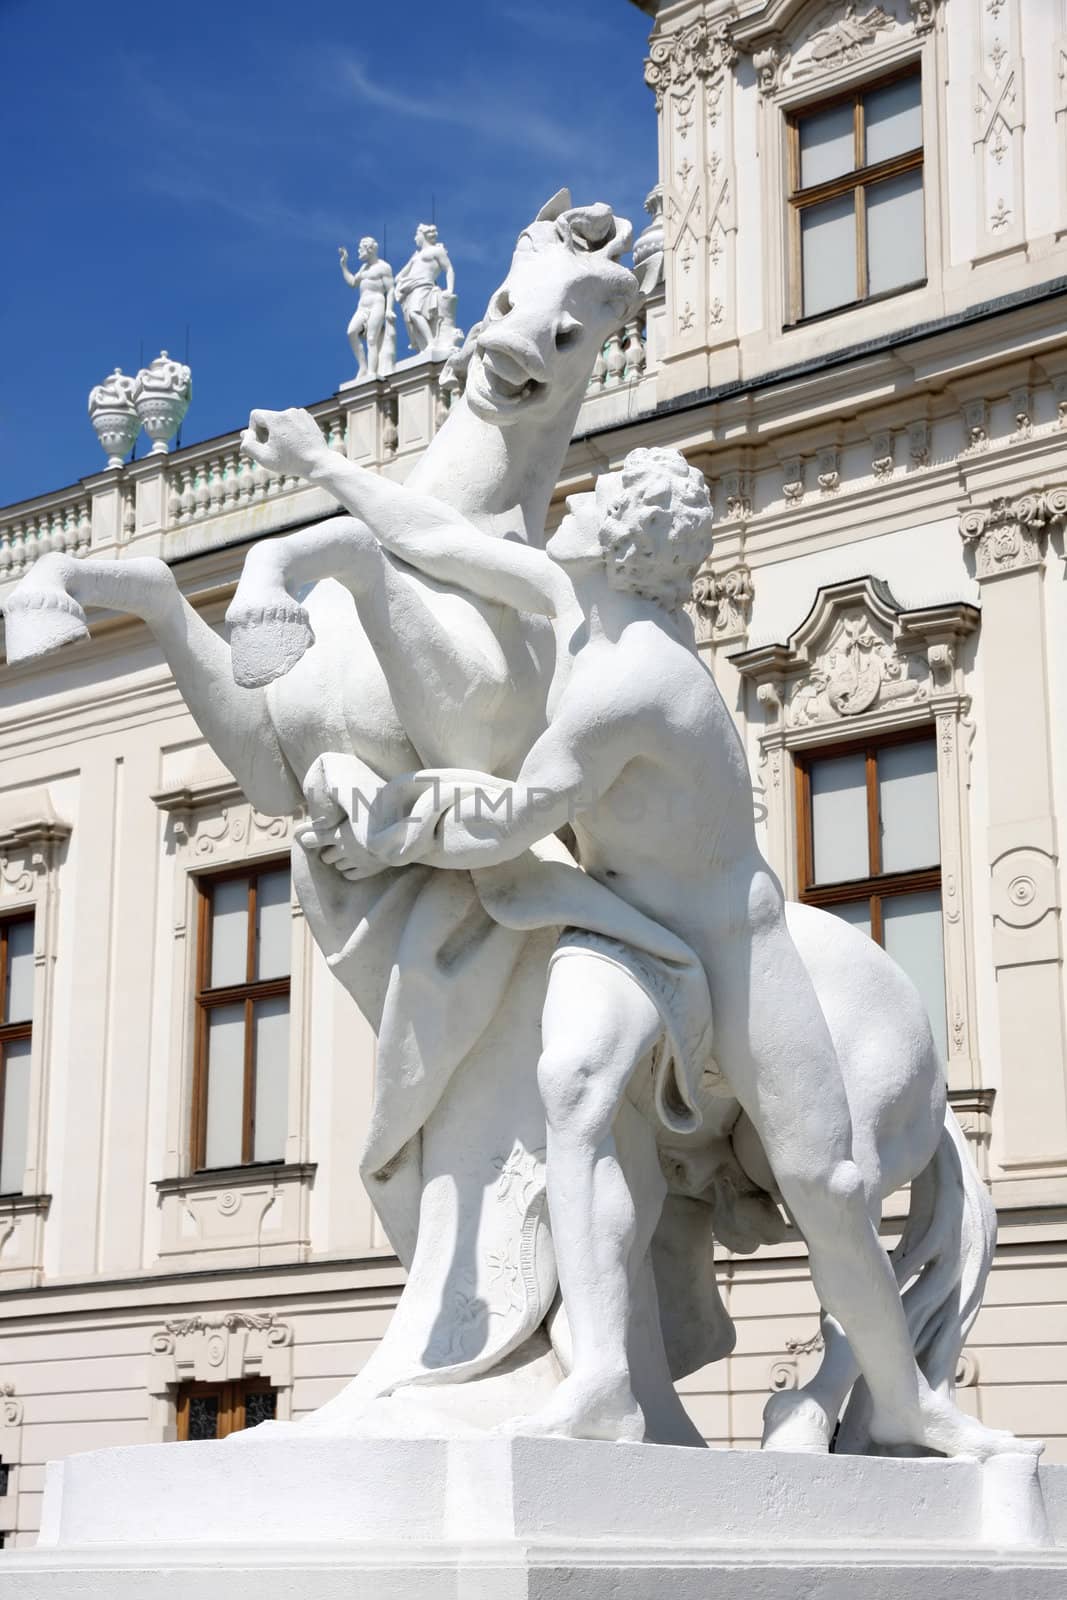 Statue at the Baroque castle Belvedere in Vienna, Austria by vladacanon